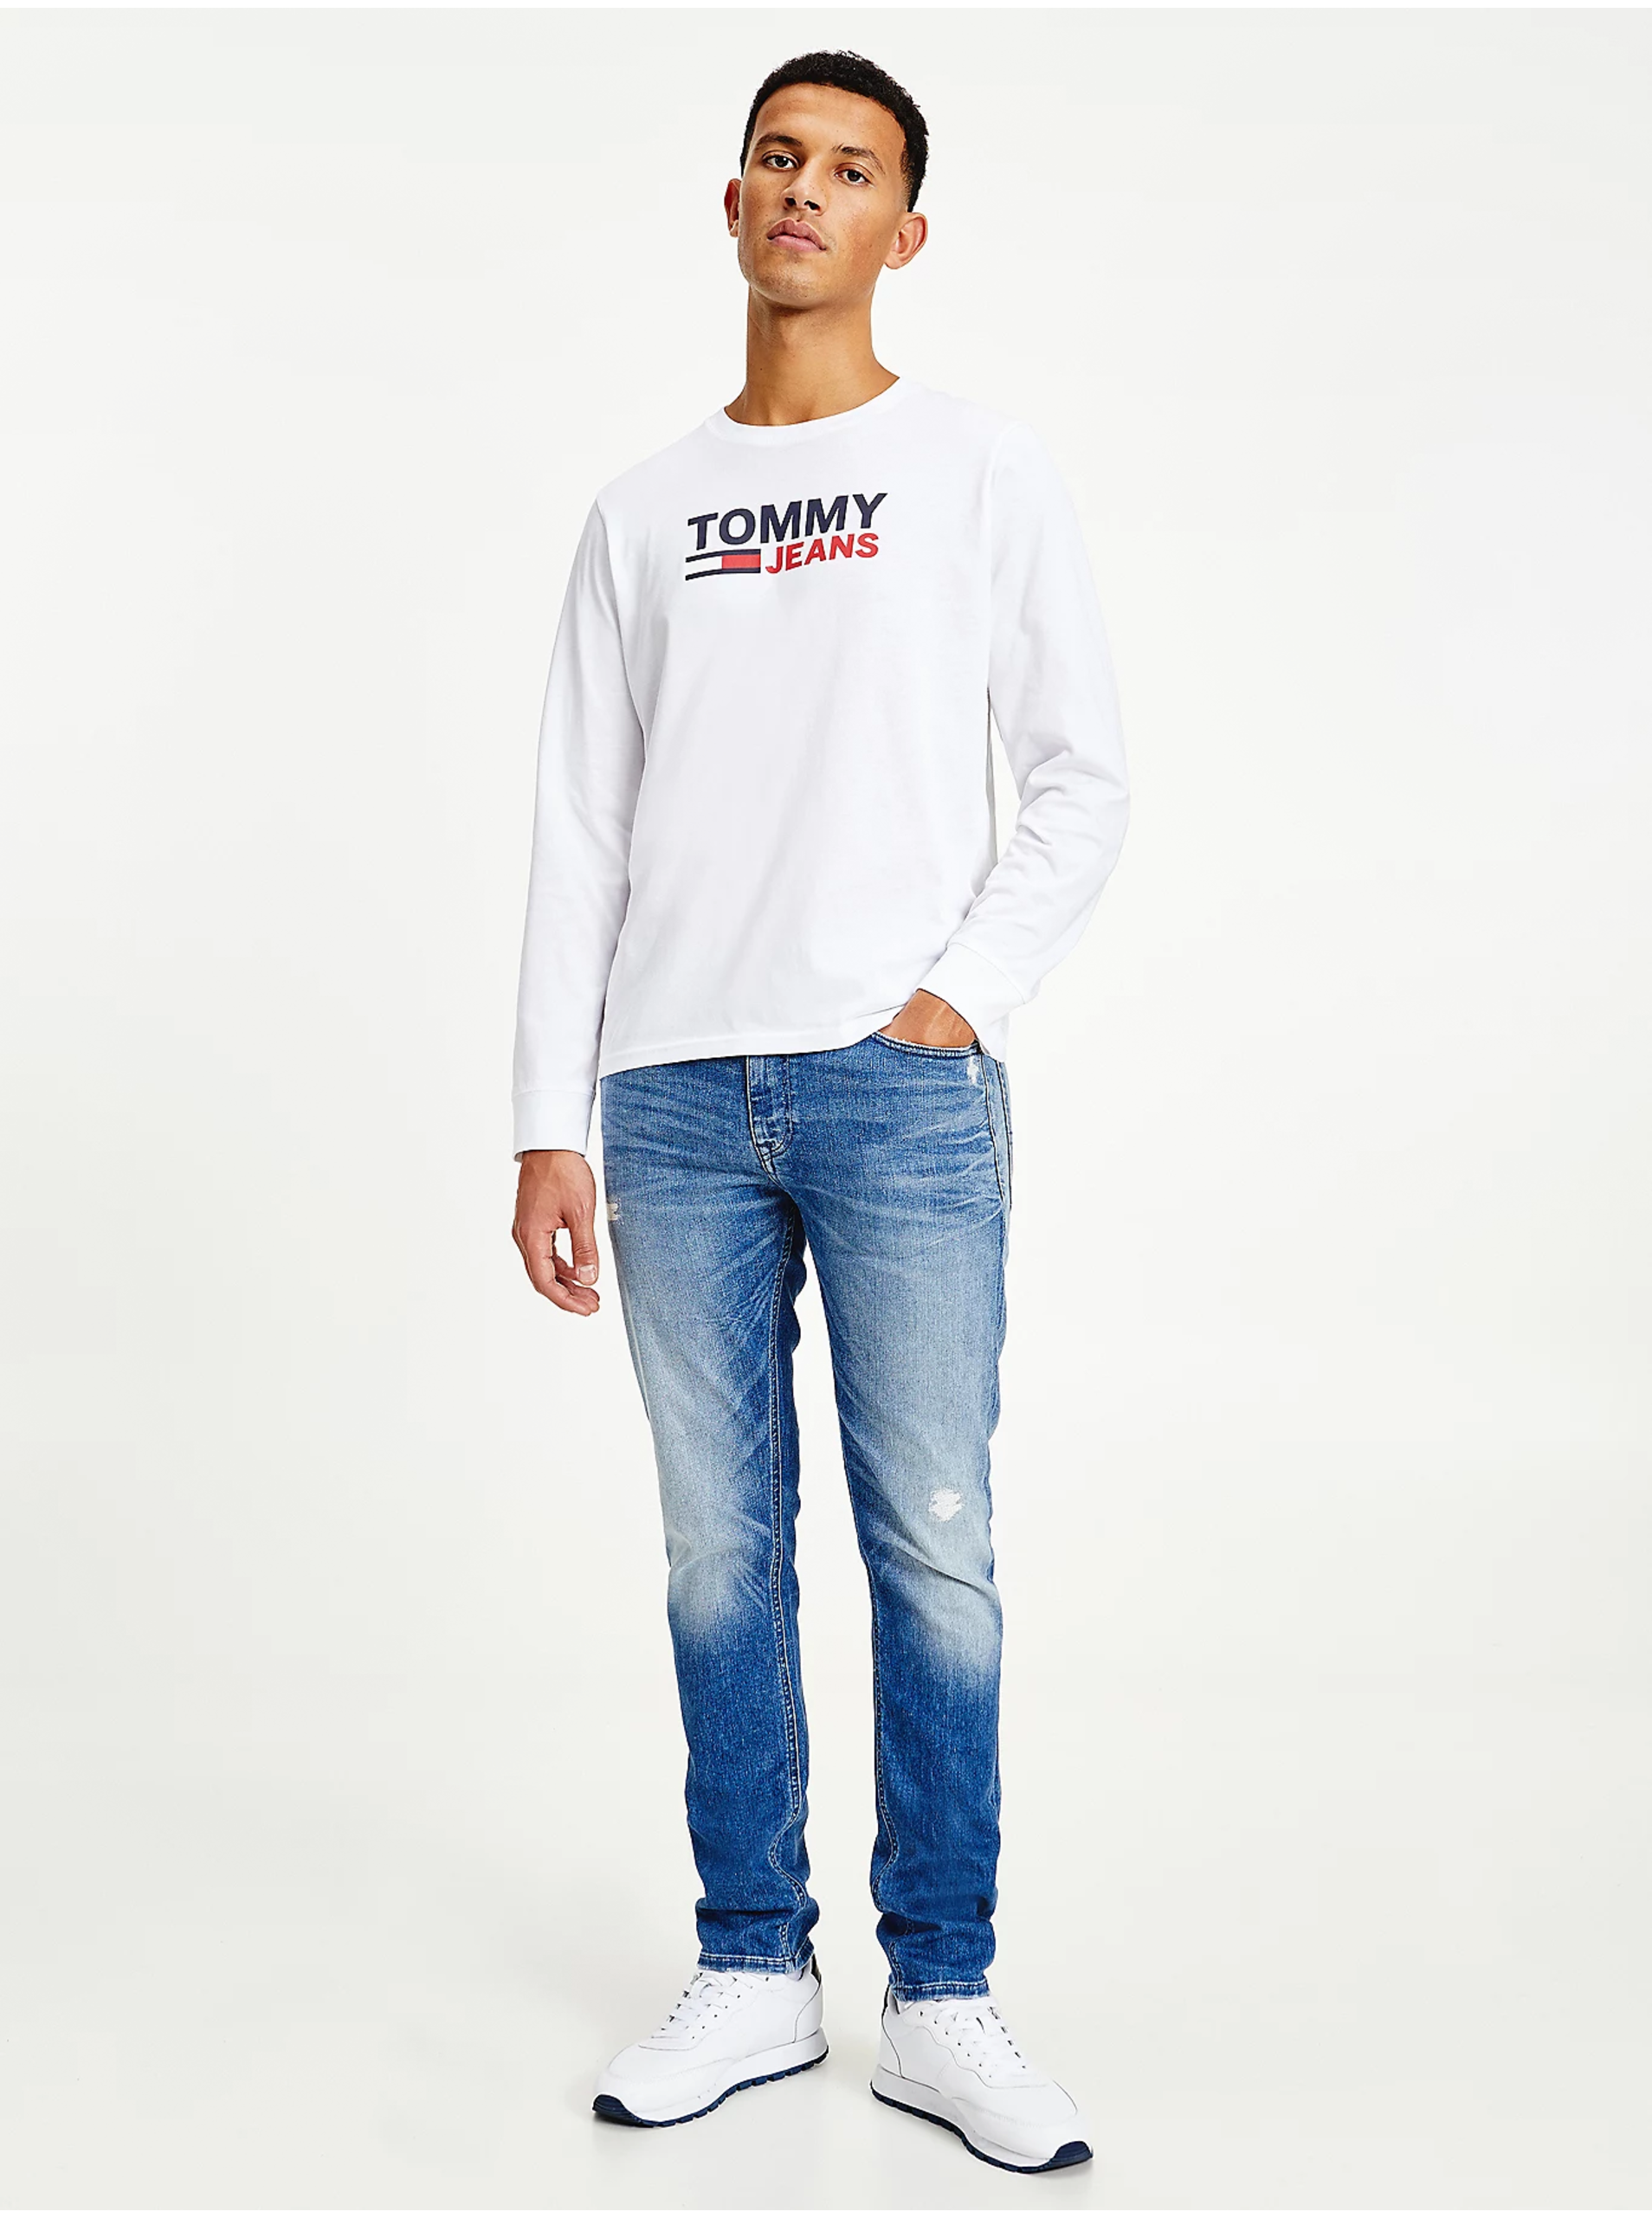 Lacno Biele pánske tričko s nápisom Tommy Jeans